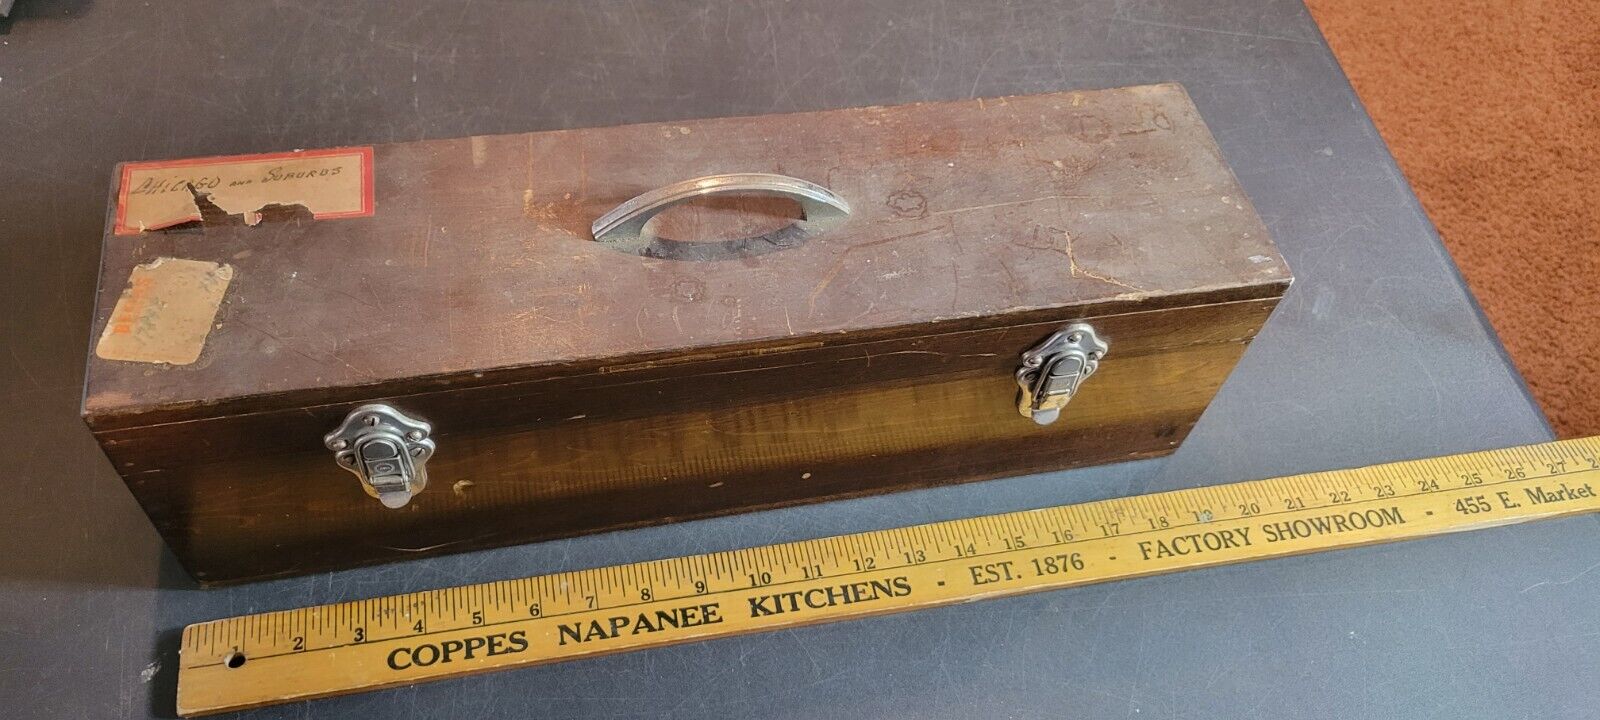 Vintage GLASS MAGIC LANTERN BOX FOR HOLDING SLIDES HARD Hand crafted wood